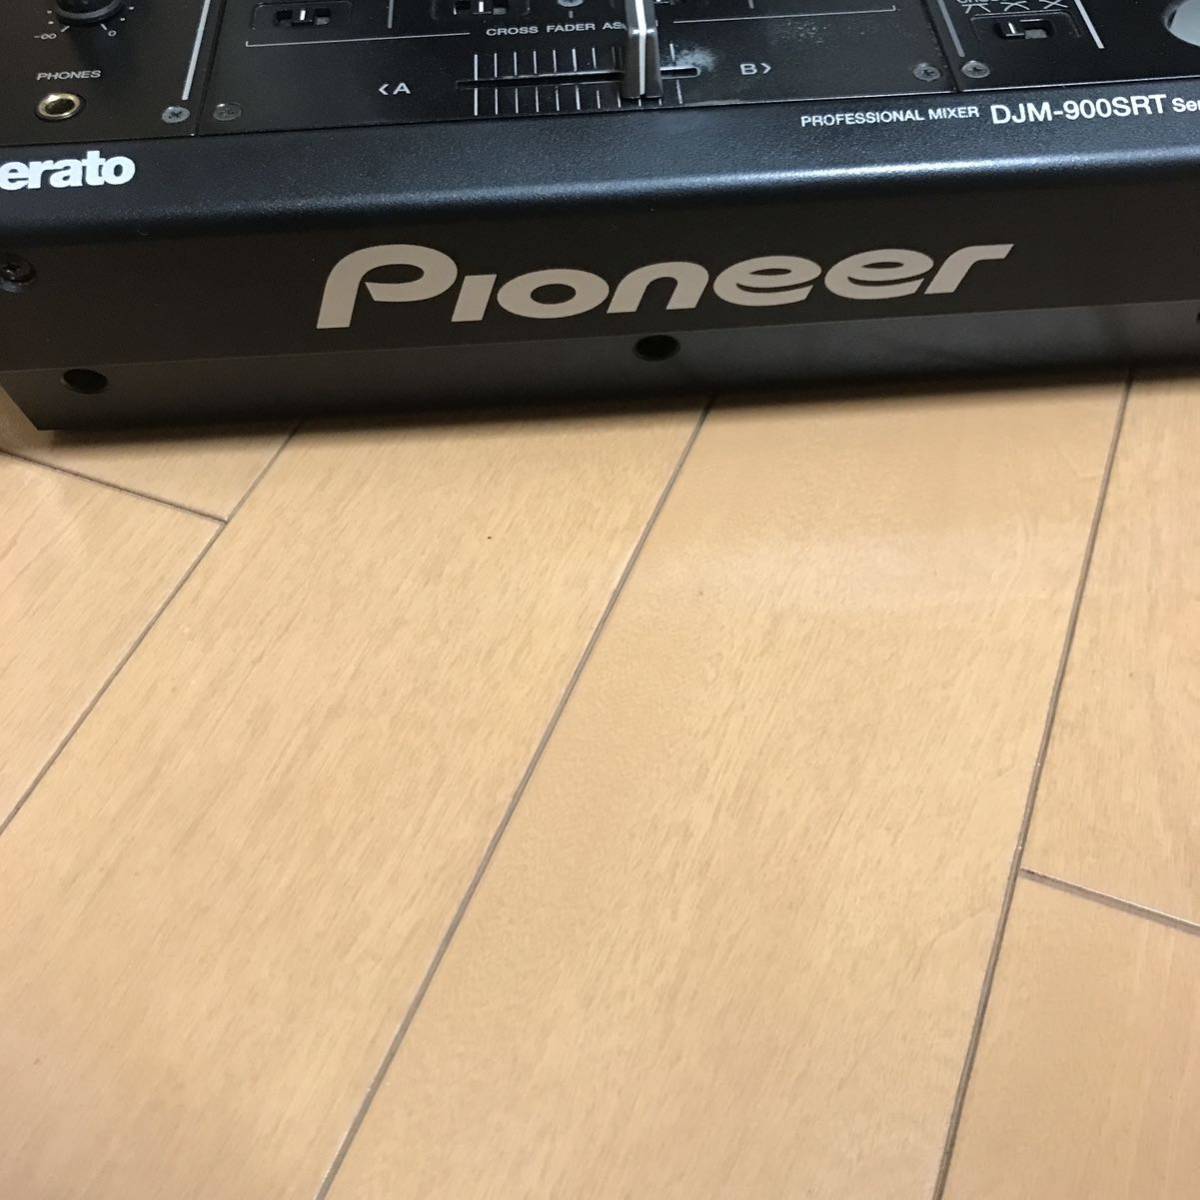 【希少】DJM900 SRT serato Pioneer